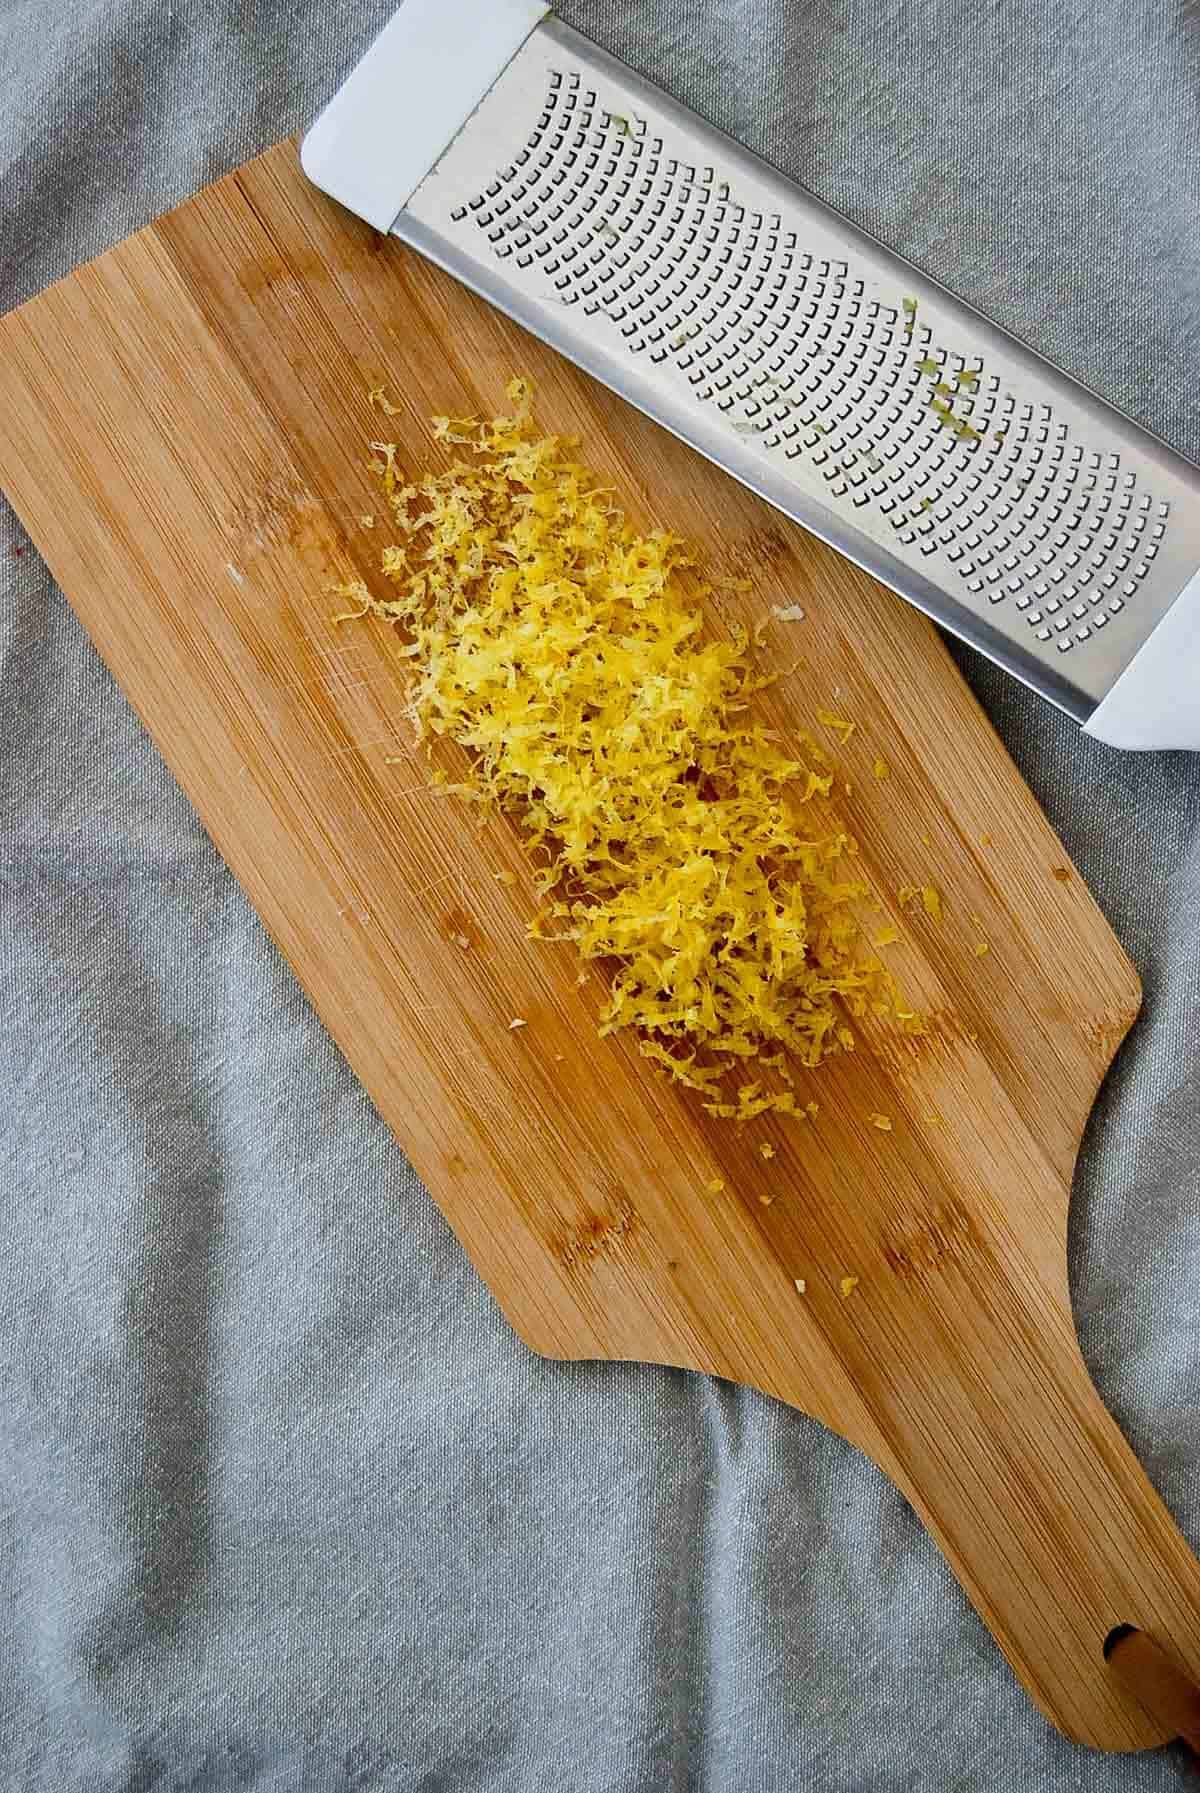 grated lemon zest on a cutting board.